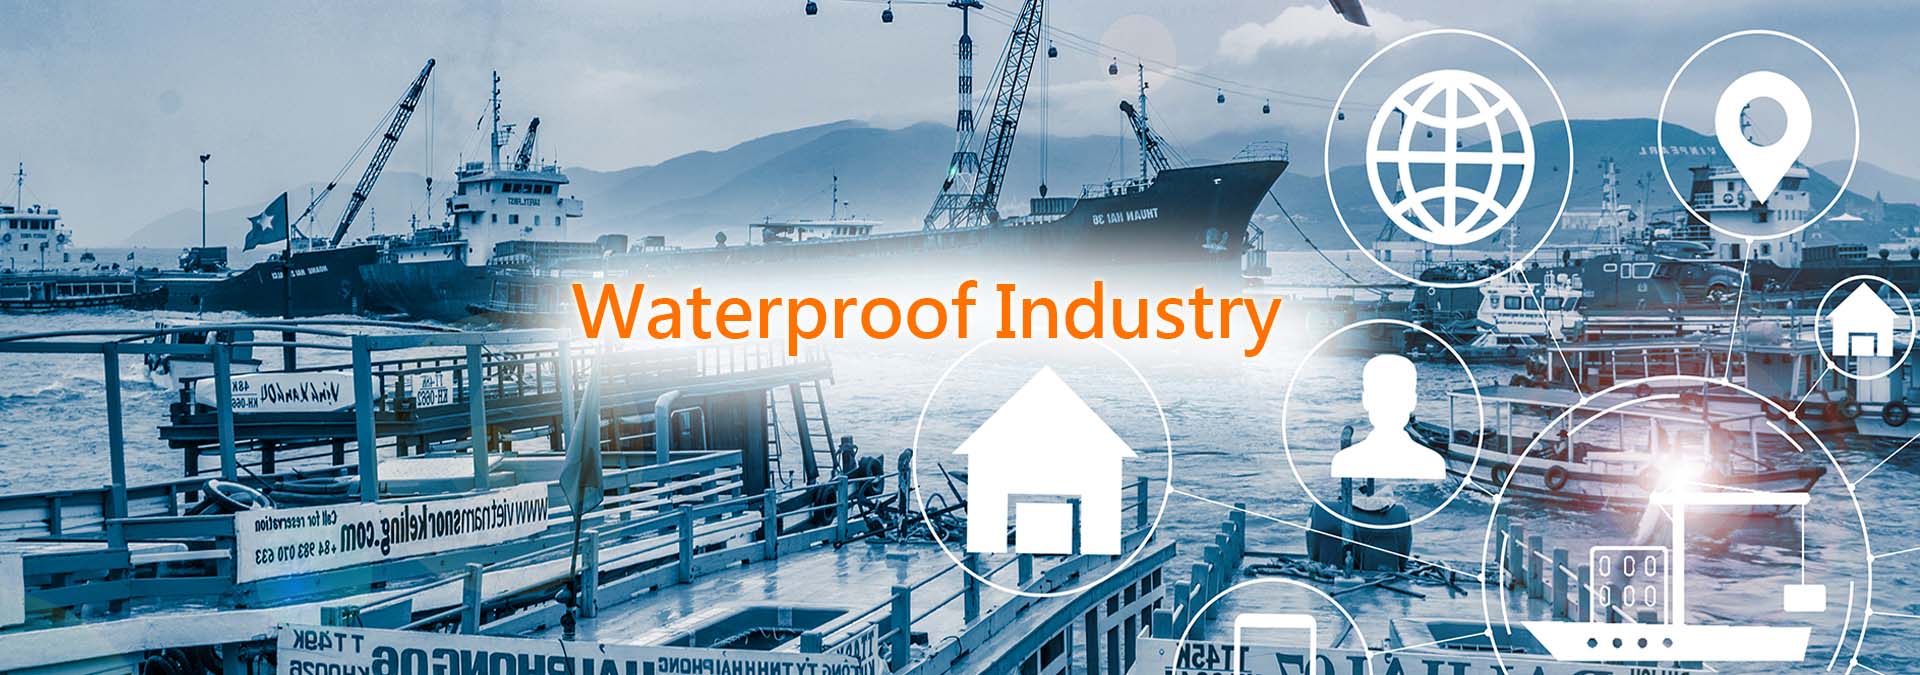 Waterproof industry｜kimWell Electronics International